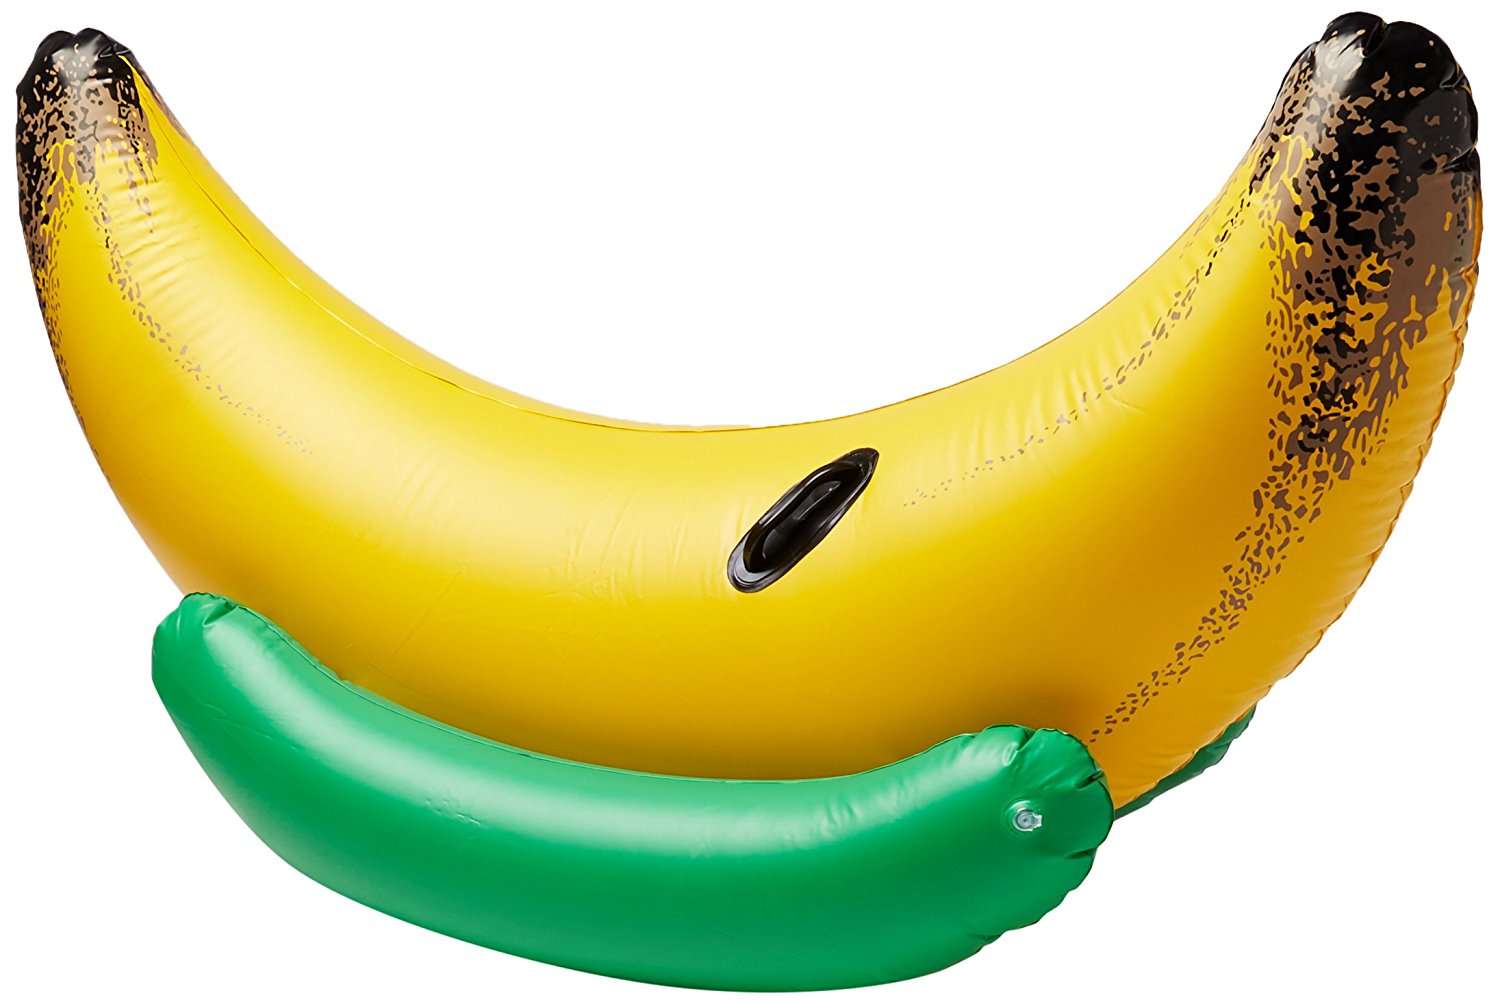 Ride on Banana Pool Float